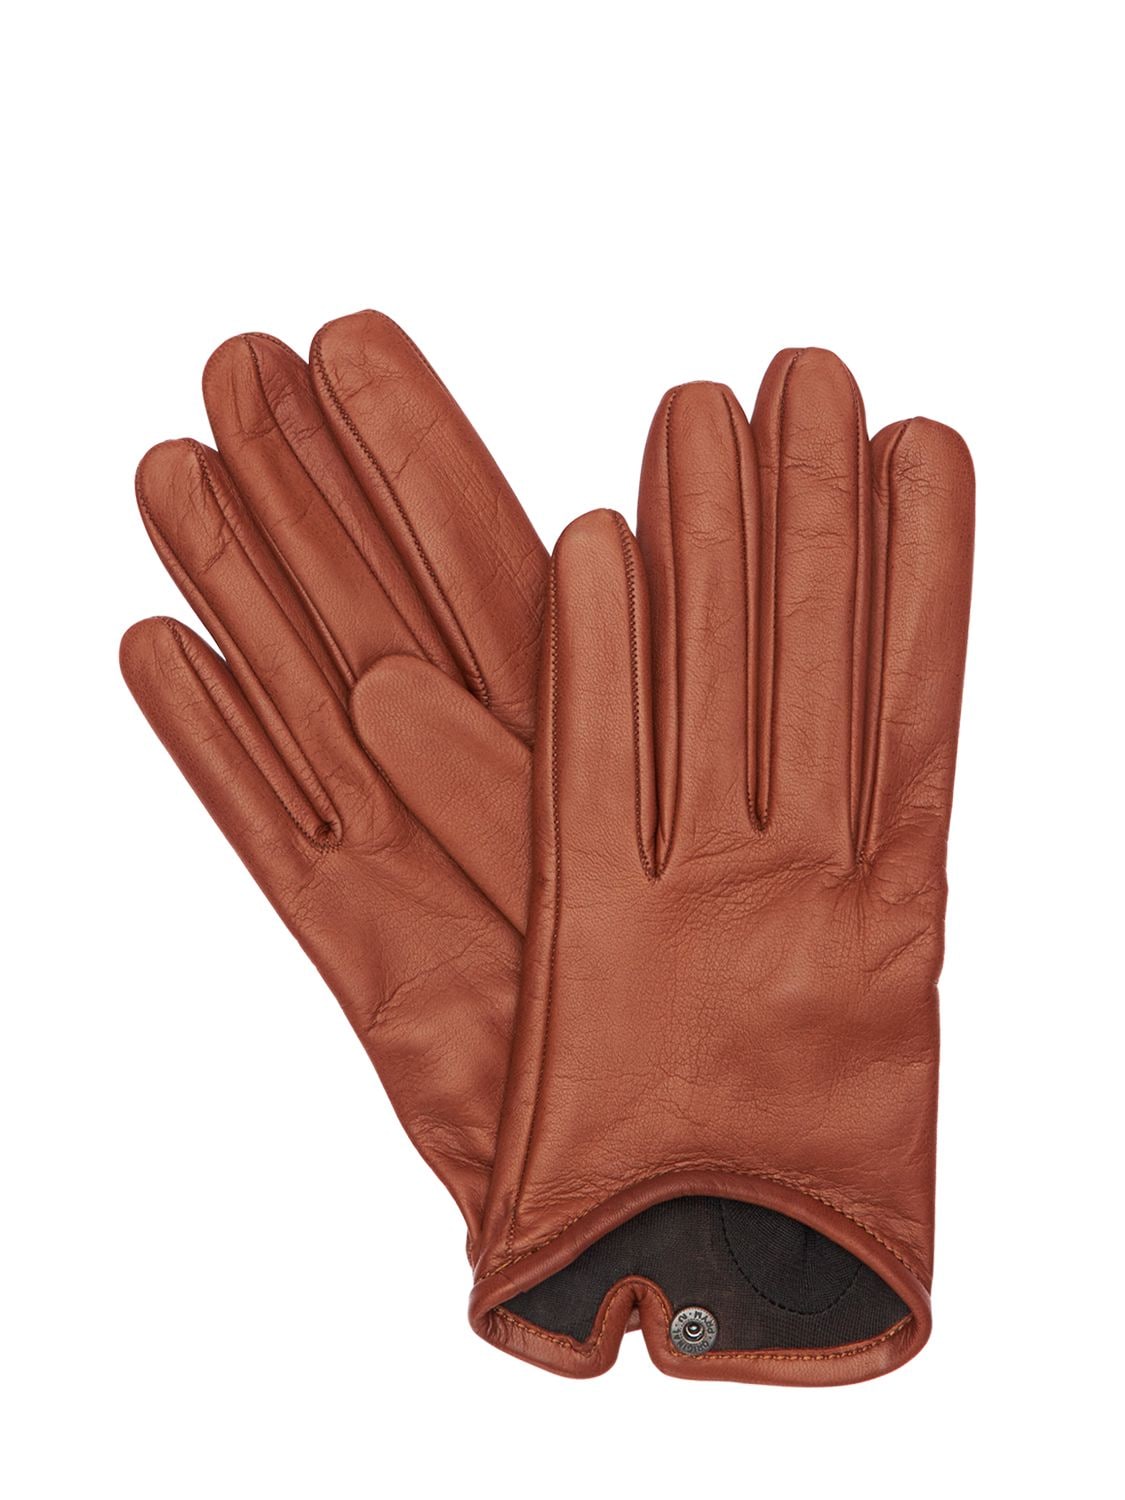 Mario Portolano Leather Gloves In Cognac